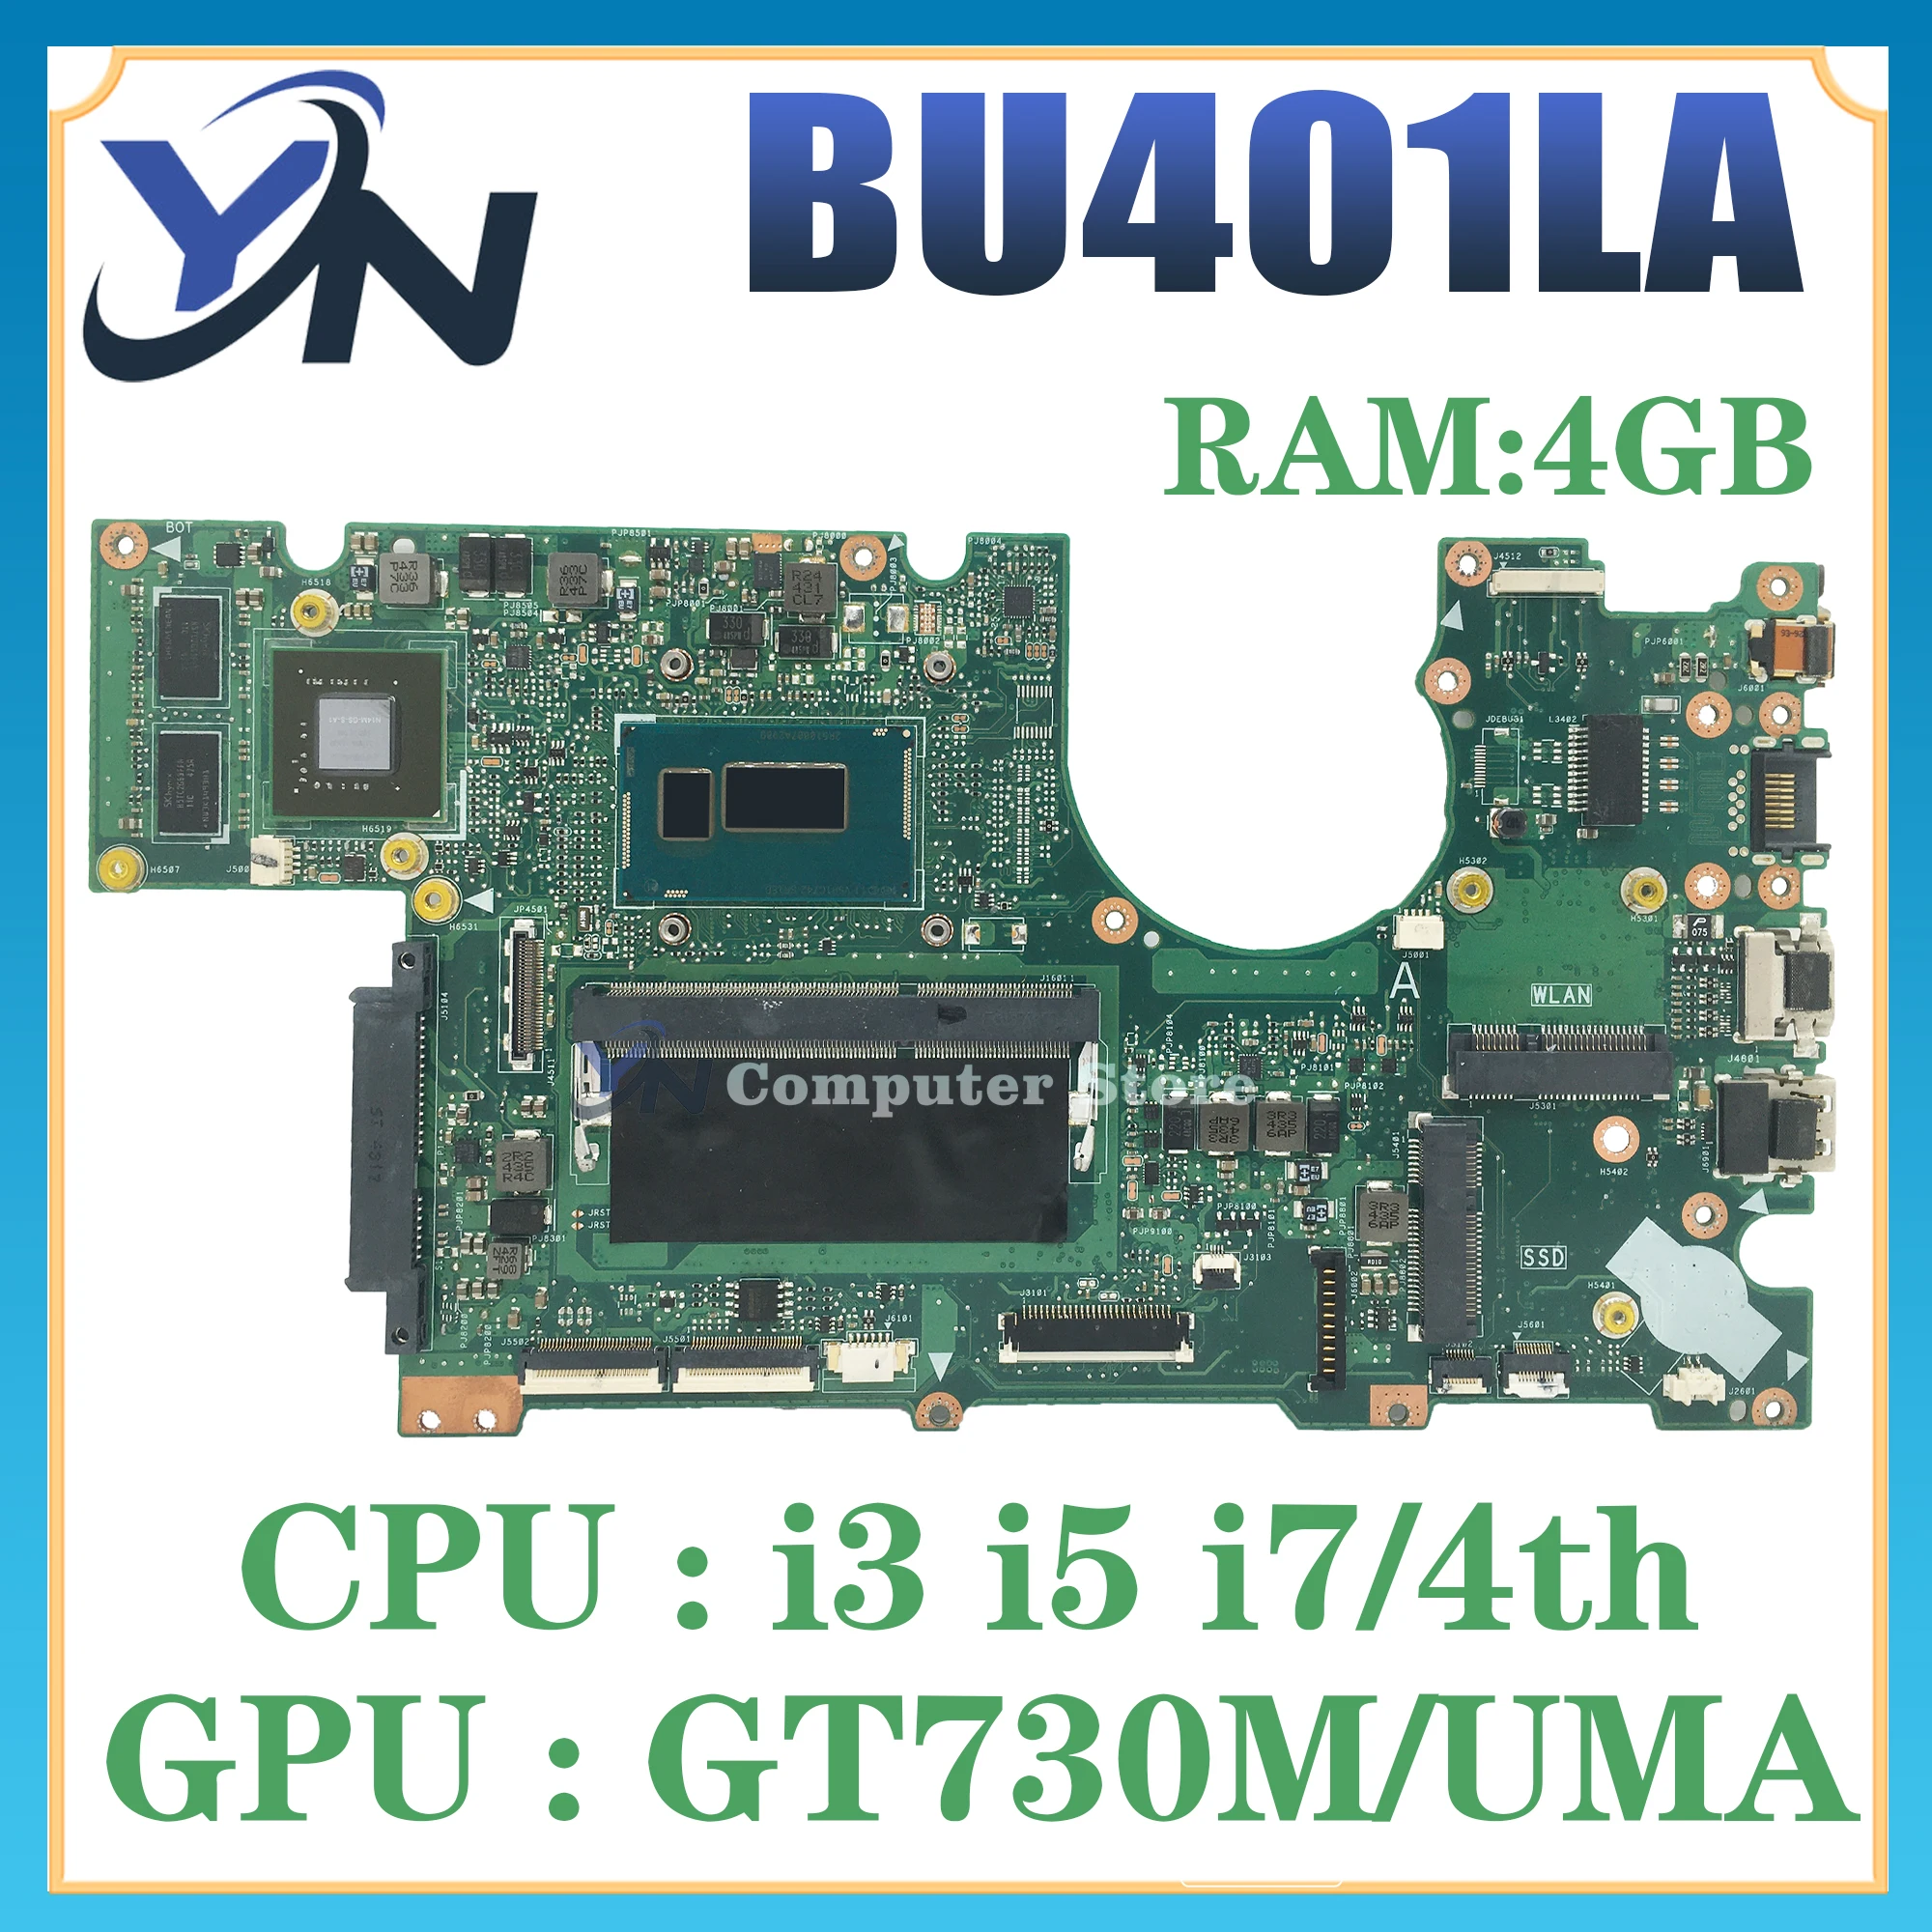 

Mainboard For ASUS ASUSPRO ADVANCED BU401L BU401LA BU401LG BU401LAV Laptop Motherboard i3 i5 i7 4th Gen UMA/PM 4GB/RAM